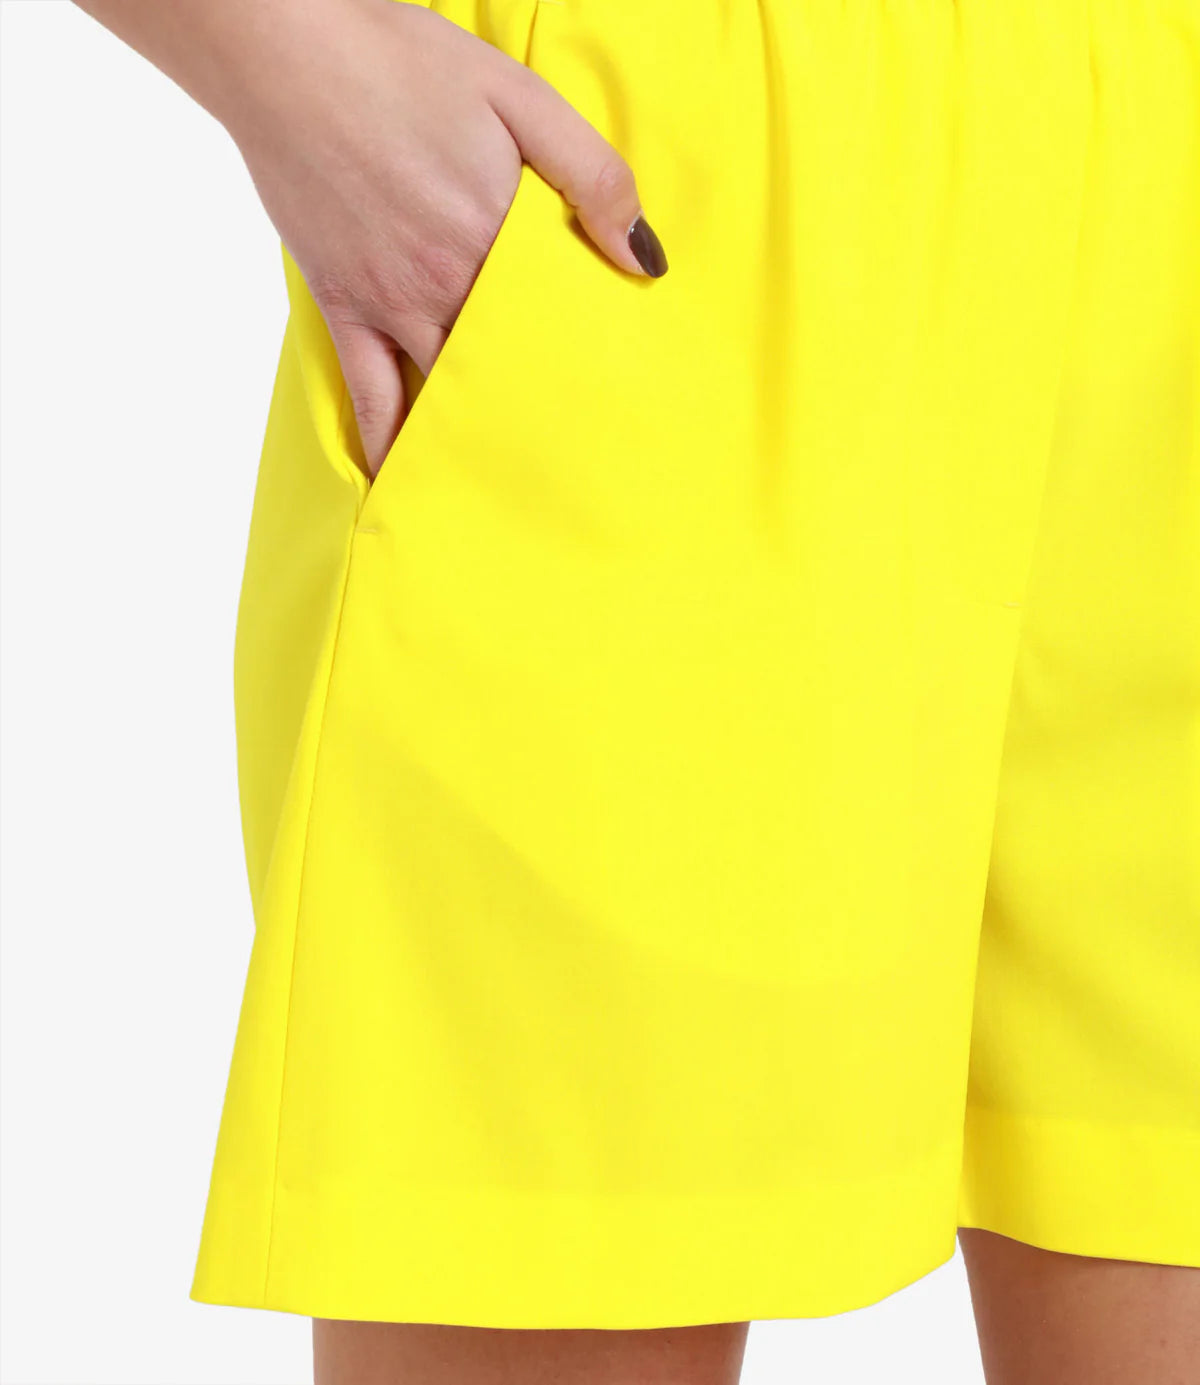 Yellow Waistband Shorts